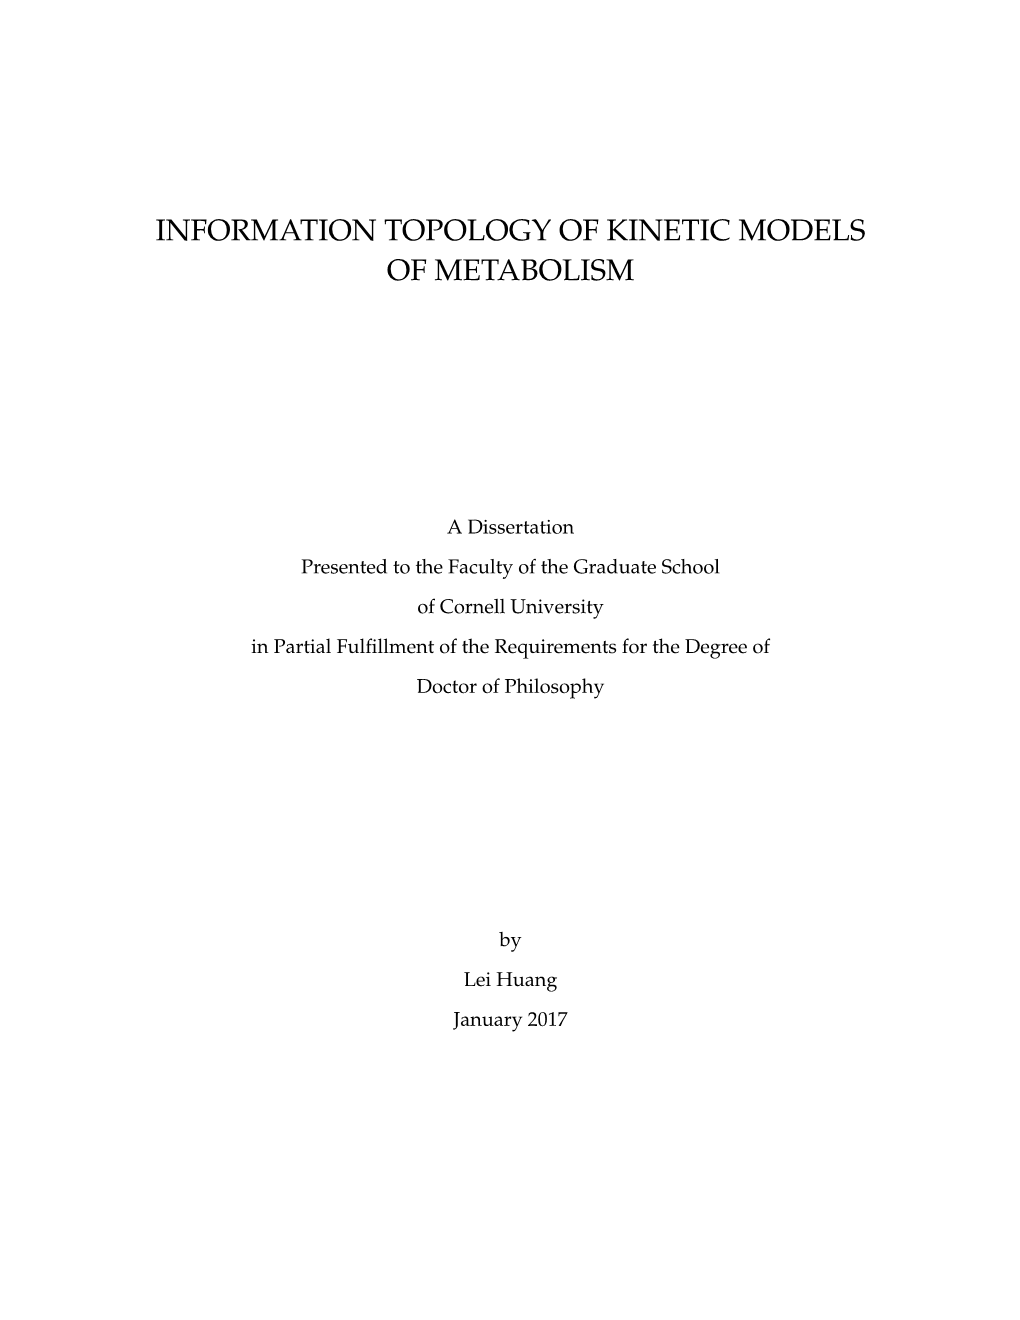 Information Topology of Kinetic Models of Metabolism